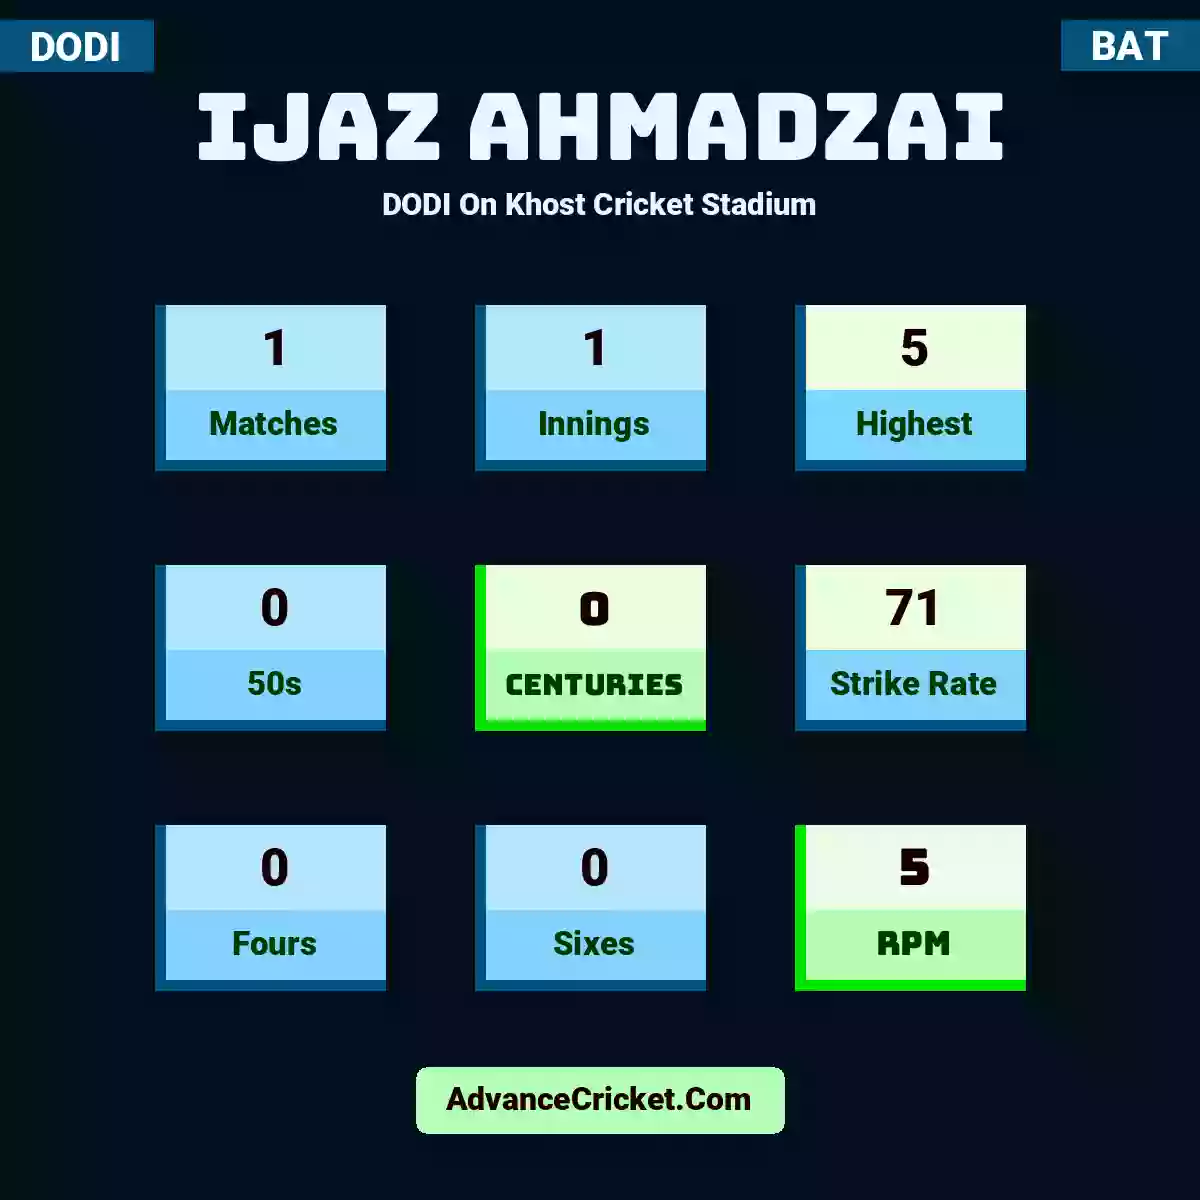 Ijaz Ahmadzai DODI  On Khost Cricket Stadium, Ijaz Ahmadzai played 1 matches, scored 5 runs as highest, 0 half-centuries, and 0 centuries, with a strike rate of 71. I.Ahmadzai hit 0 fours and 0 sixes, with an RPM of 5.